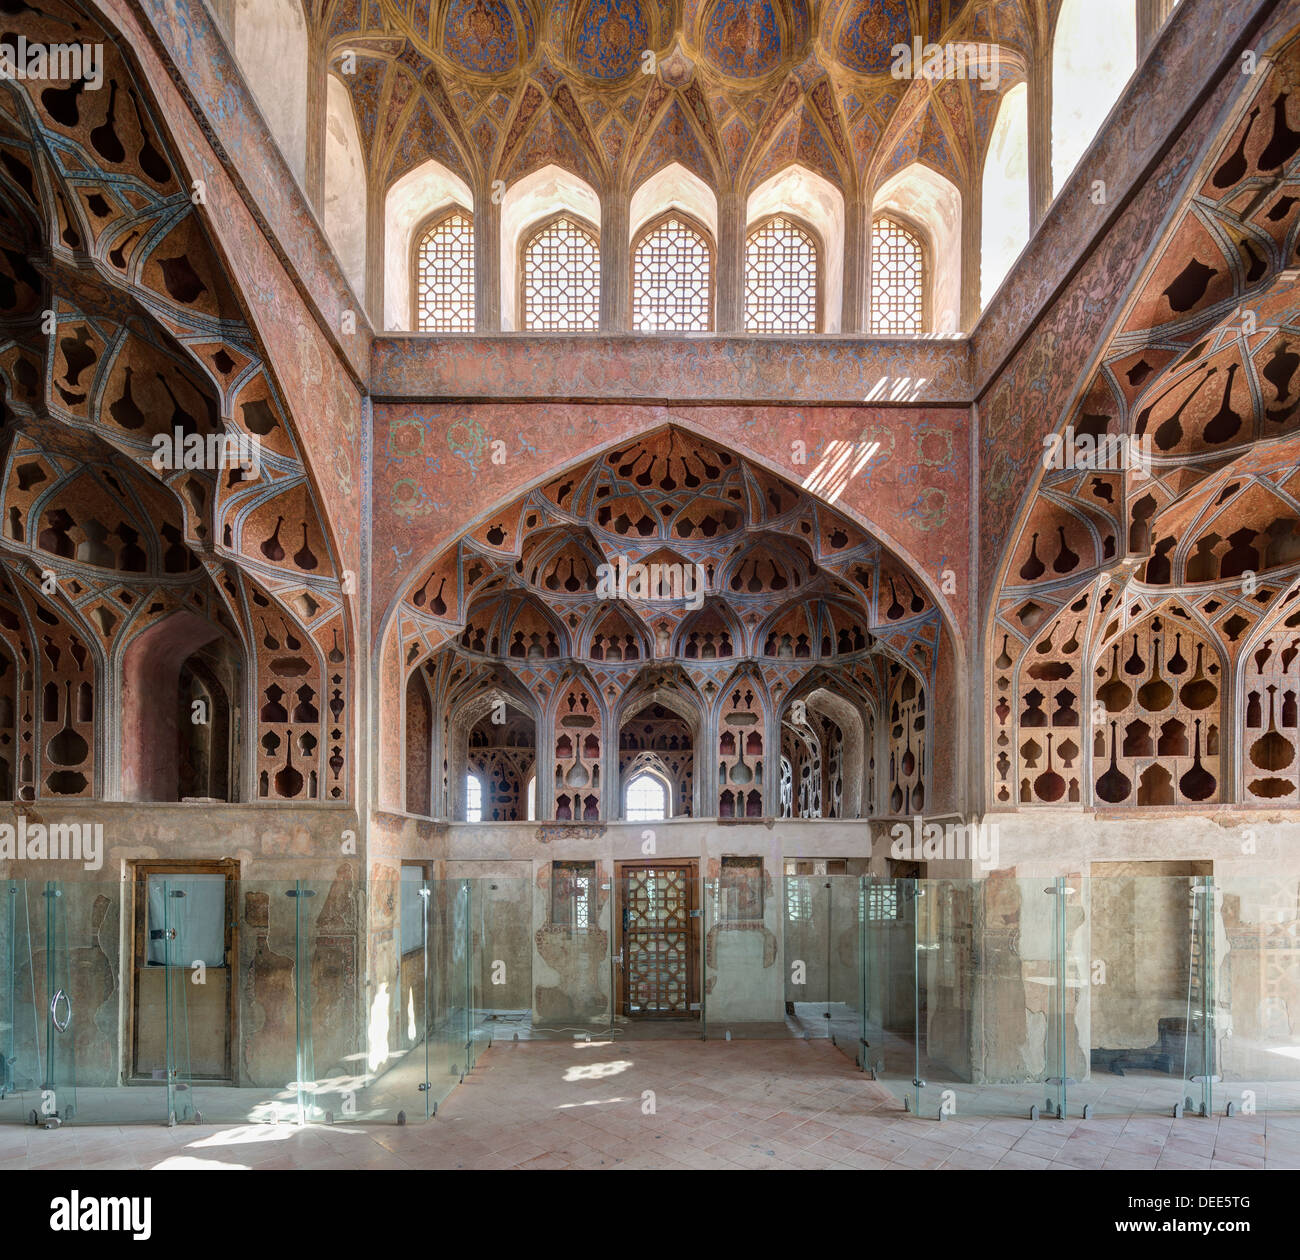 interior of so-called music room, Ali Qapu, Isfahan, Iran Stock Photo